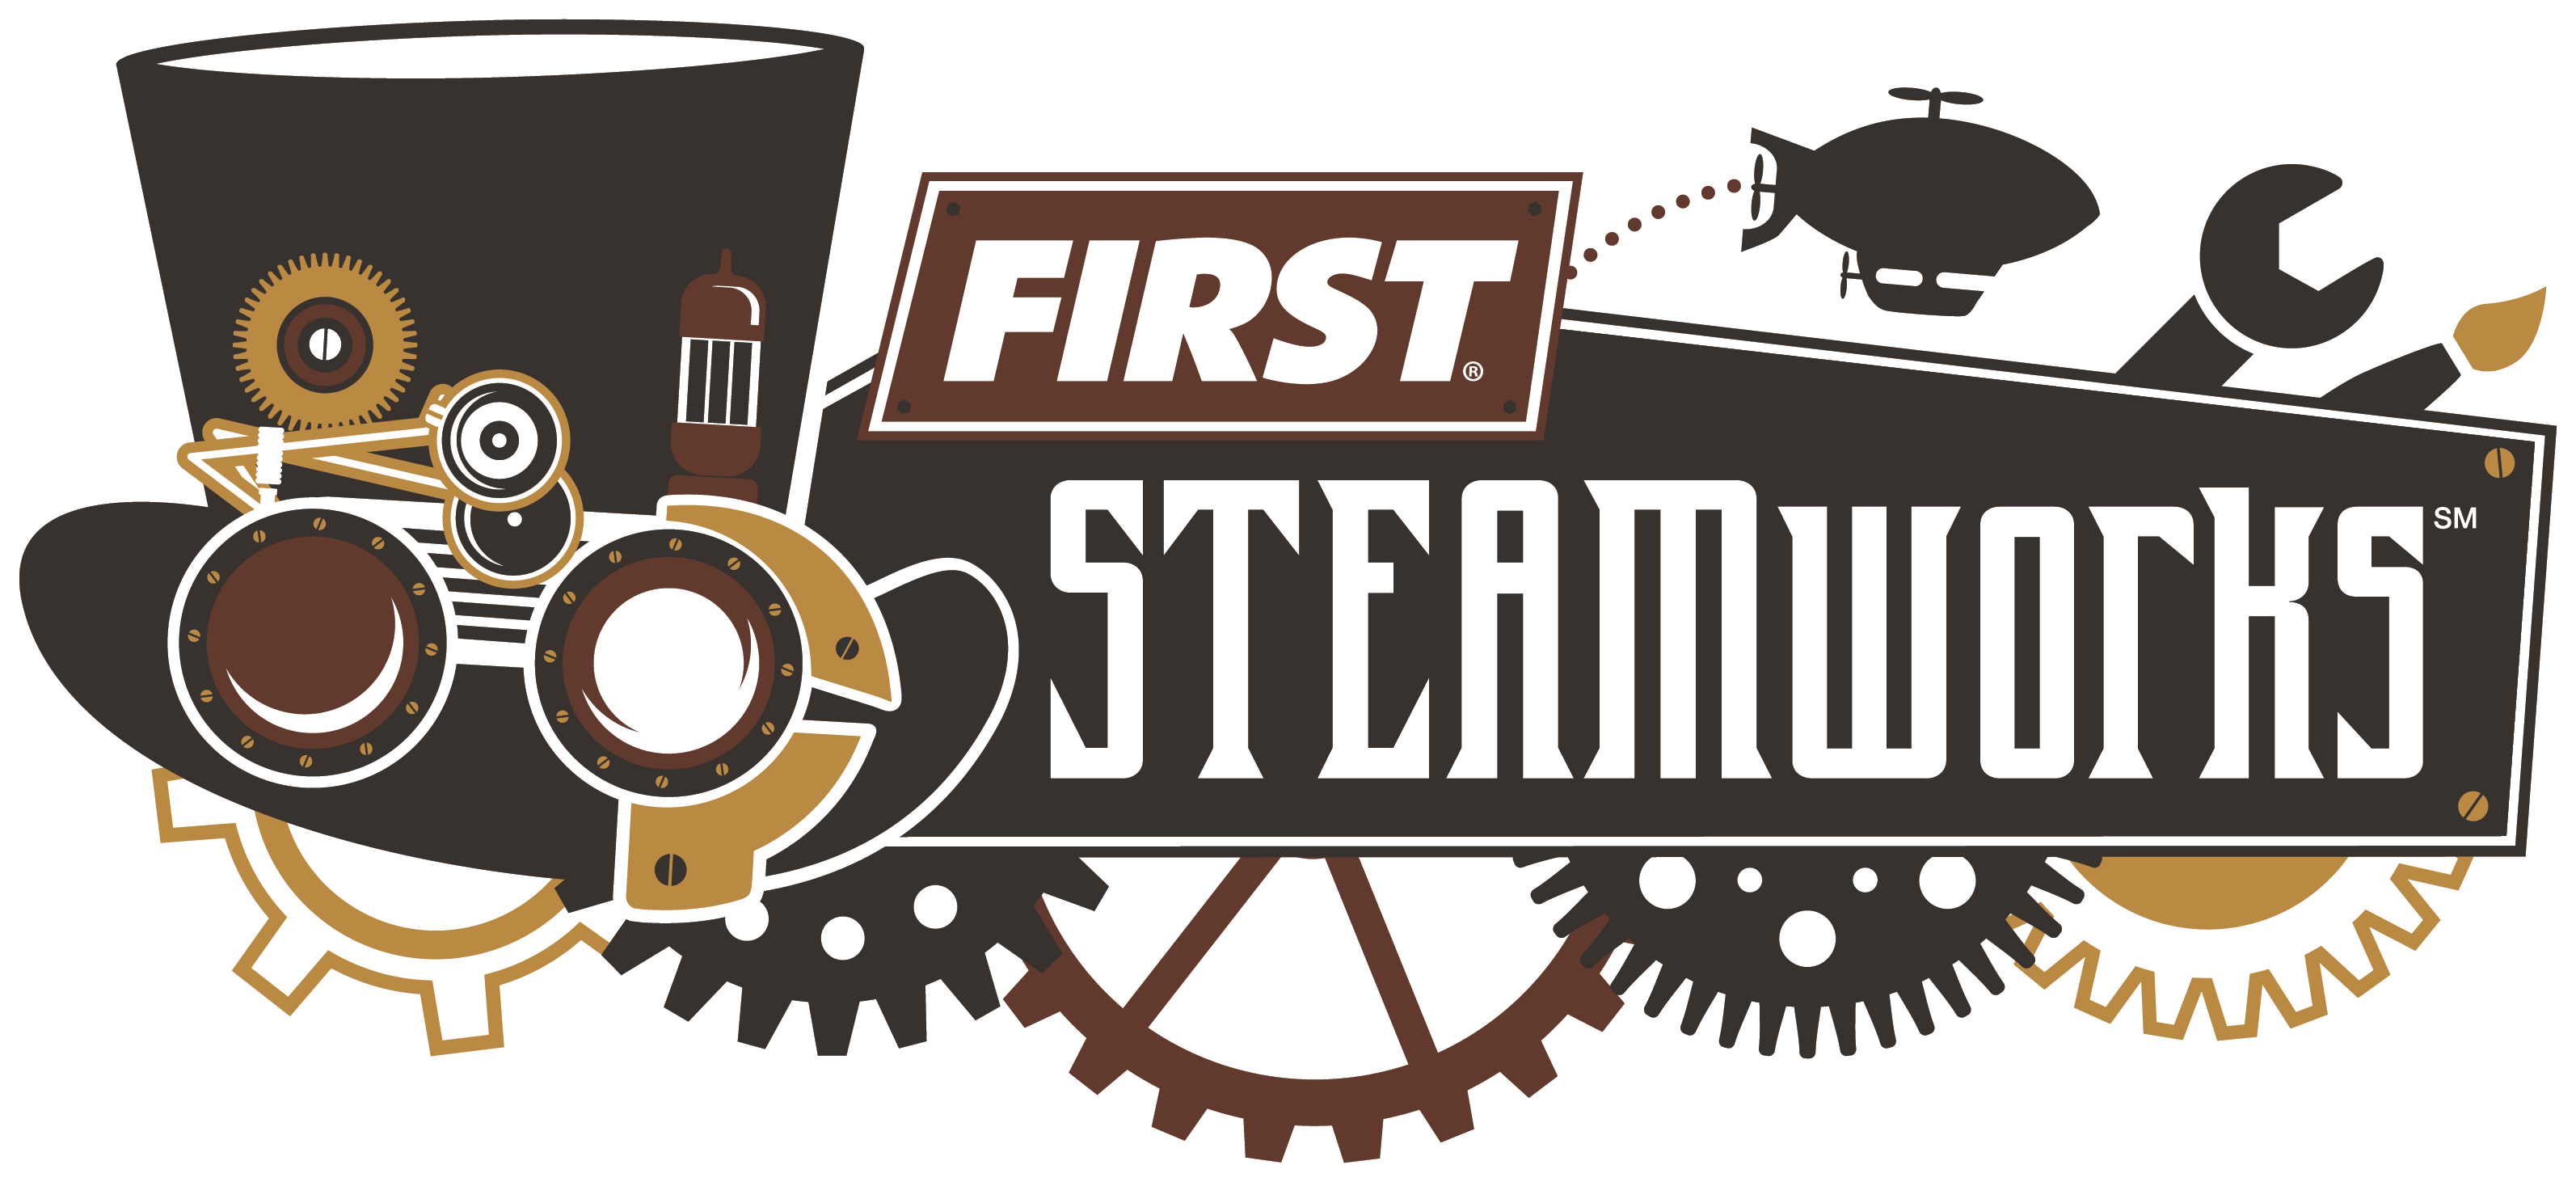 FIRST Steamworks logo, logotype